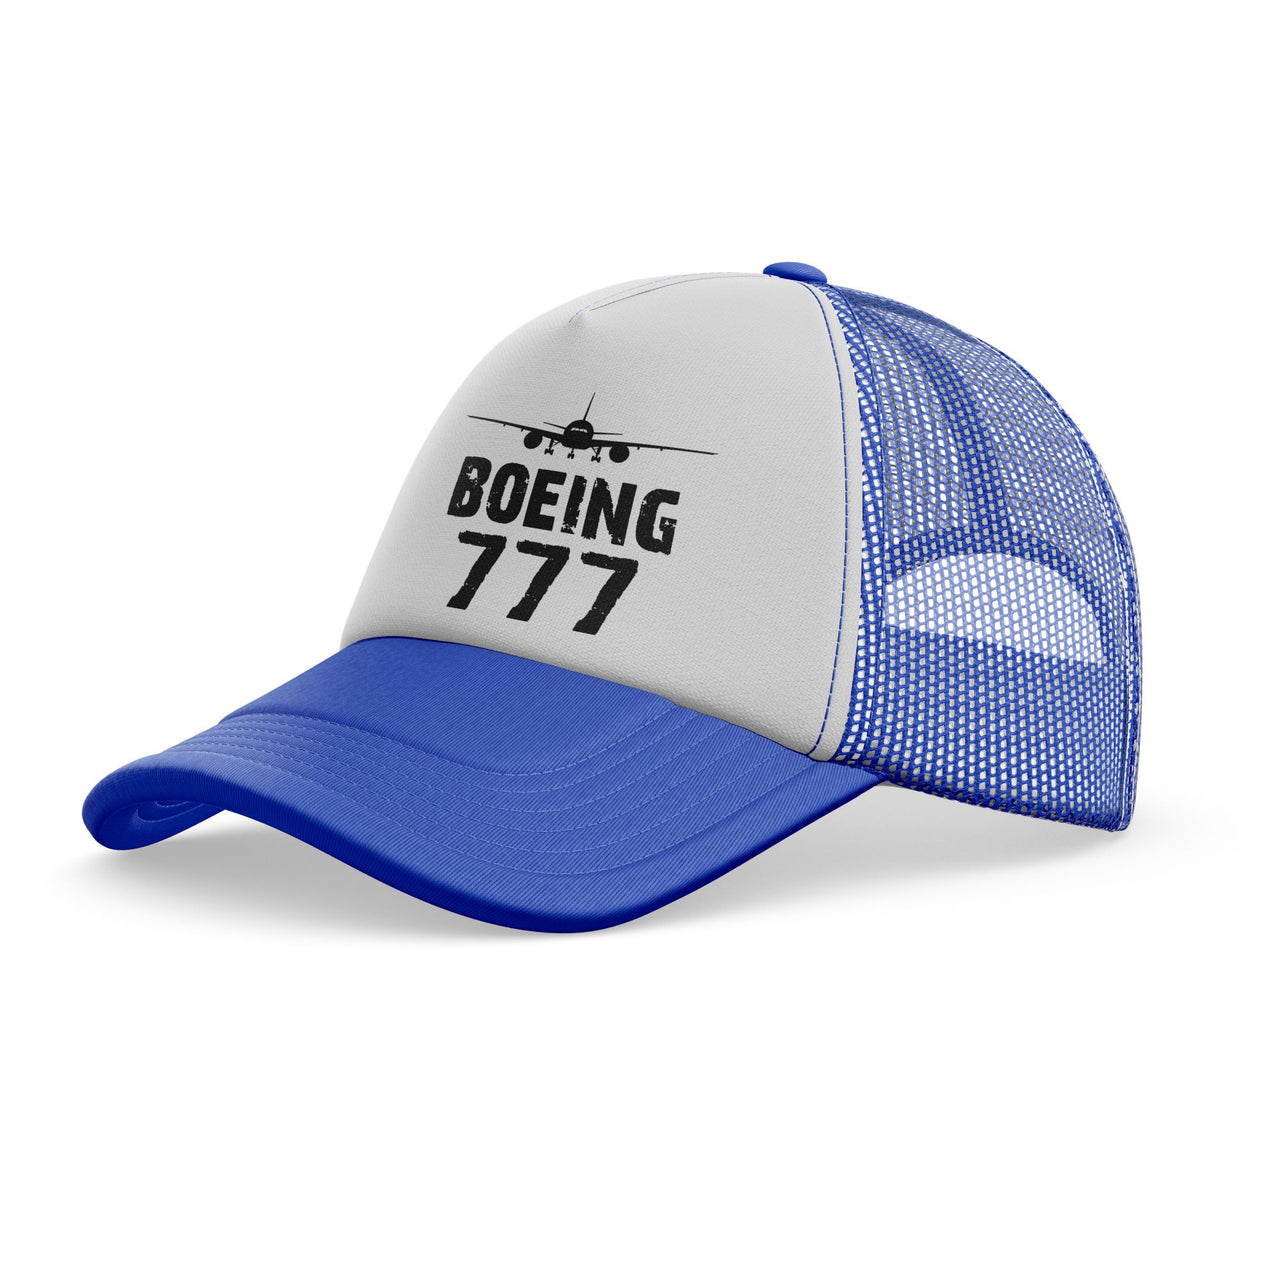 Boeing 777 & Plane Designed Trucker Caps & Hats